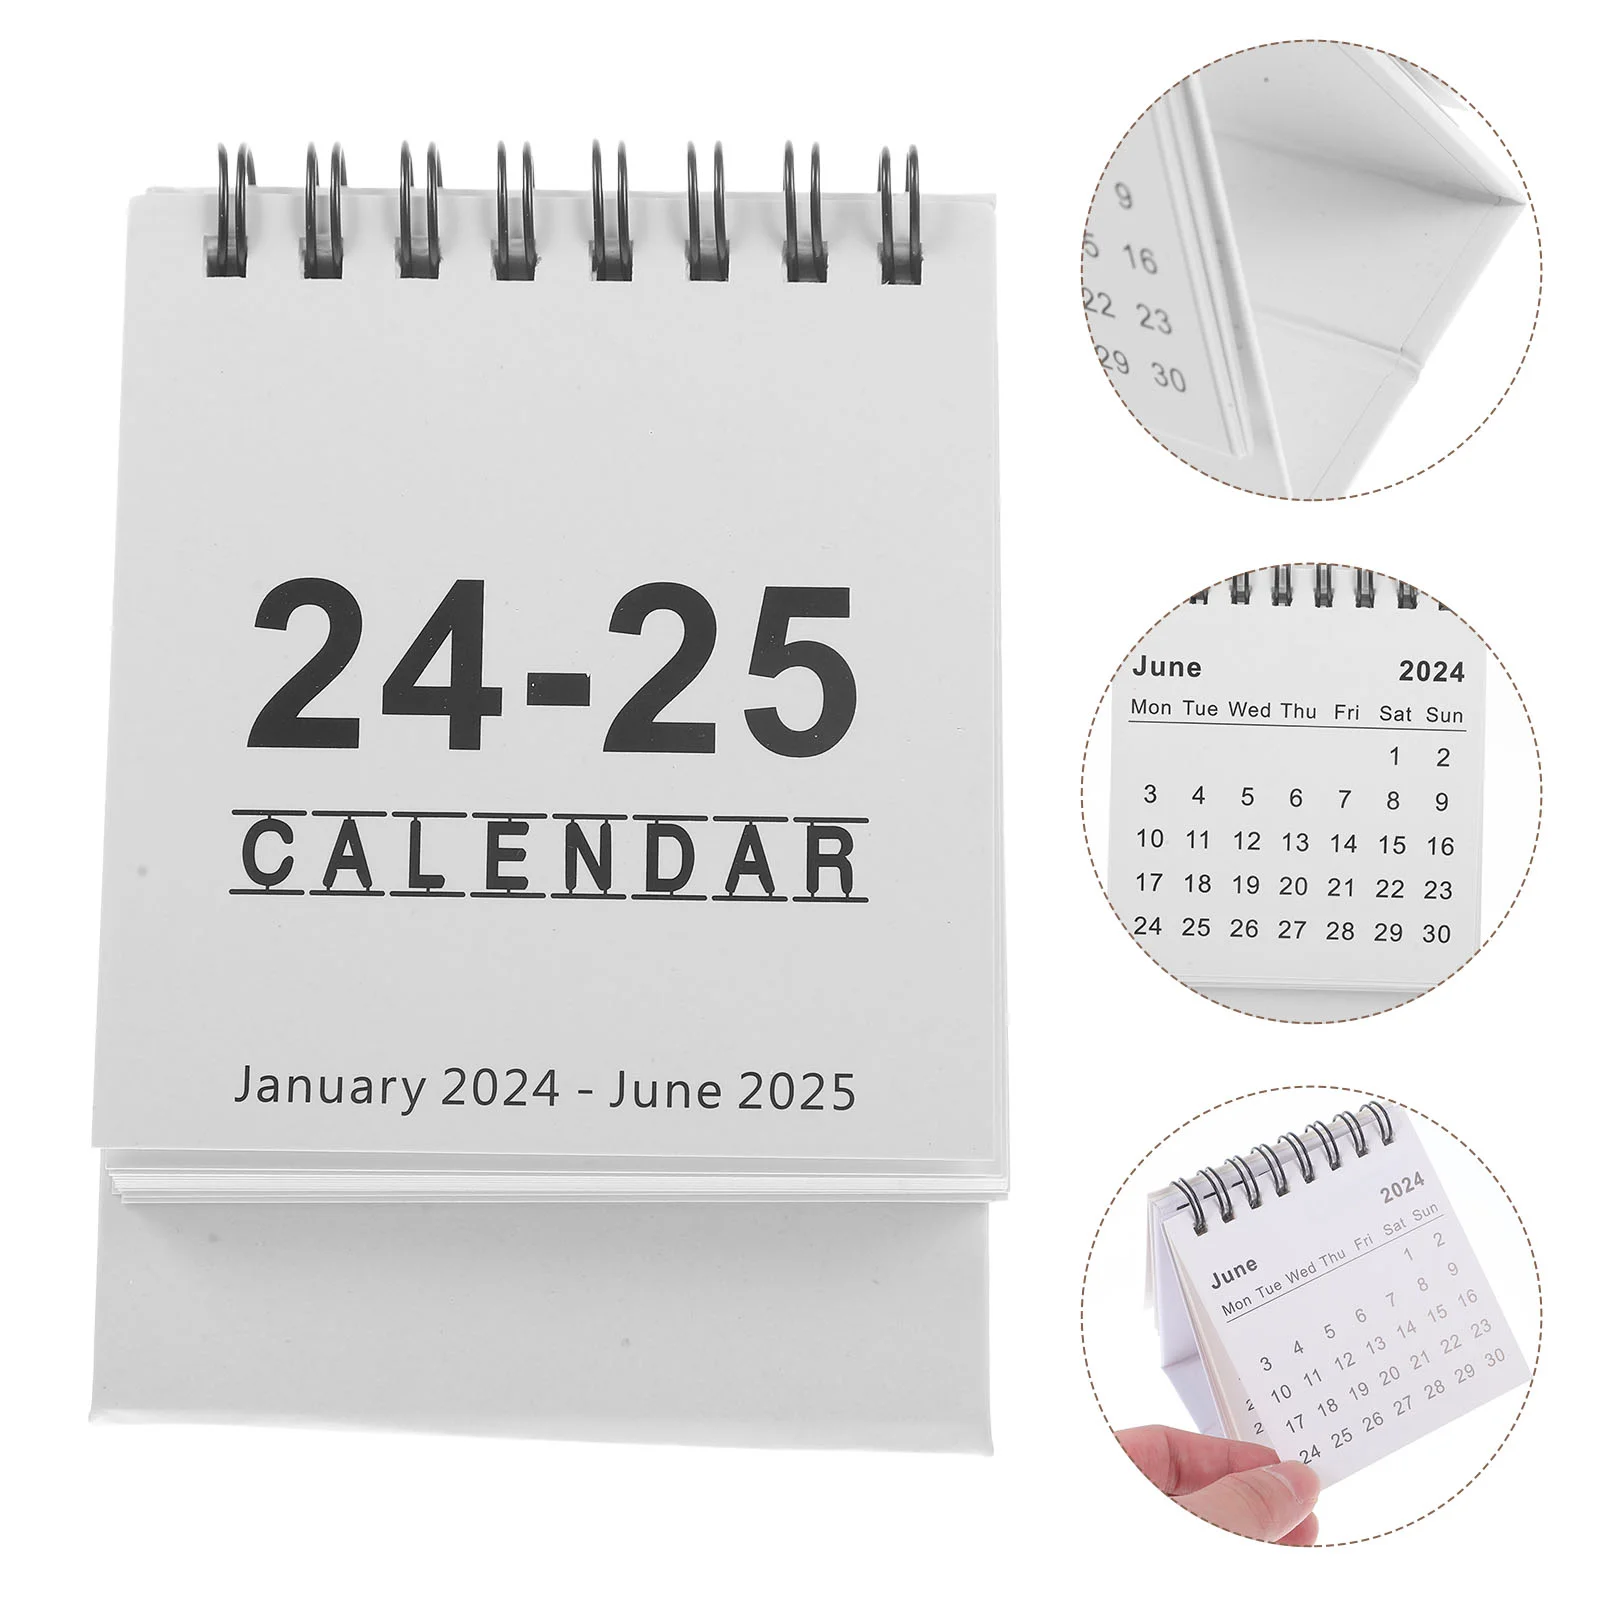 

Table Desk Tabletop 2025 Calendar Home Desk Calendar 2025 Table Calendar Creative Calendar Decor for Desk Desktop Decor